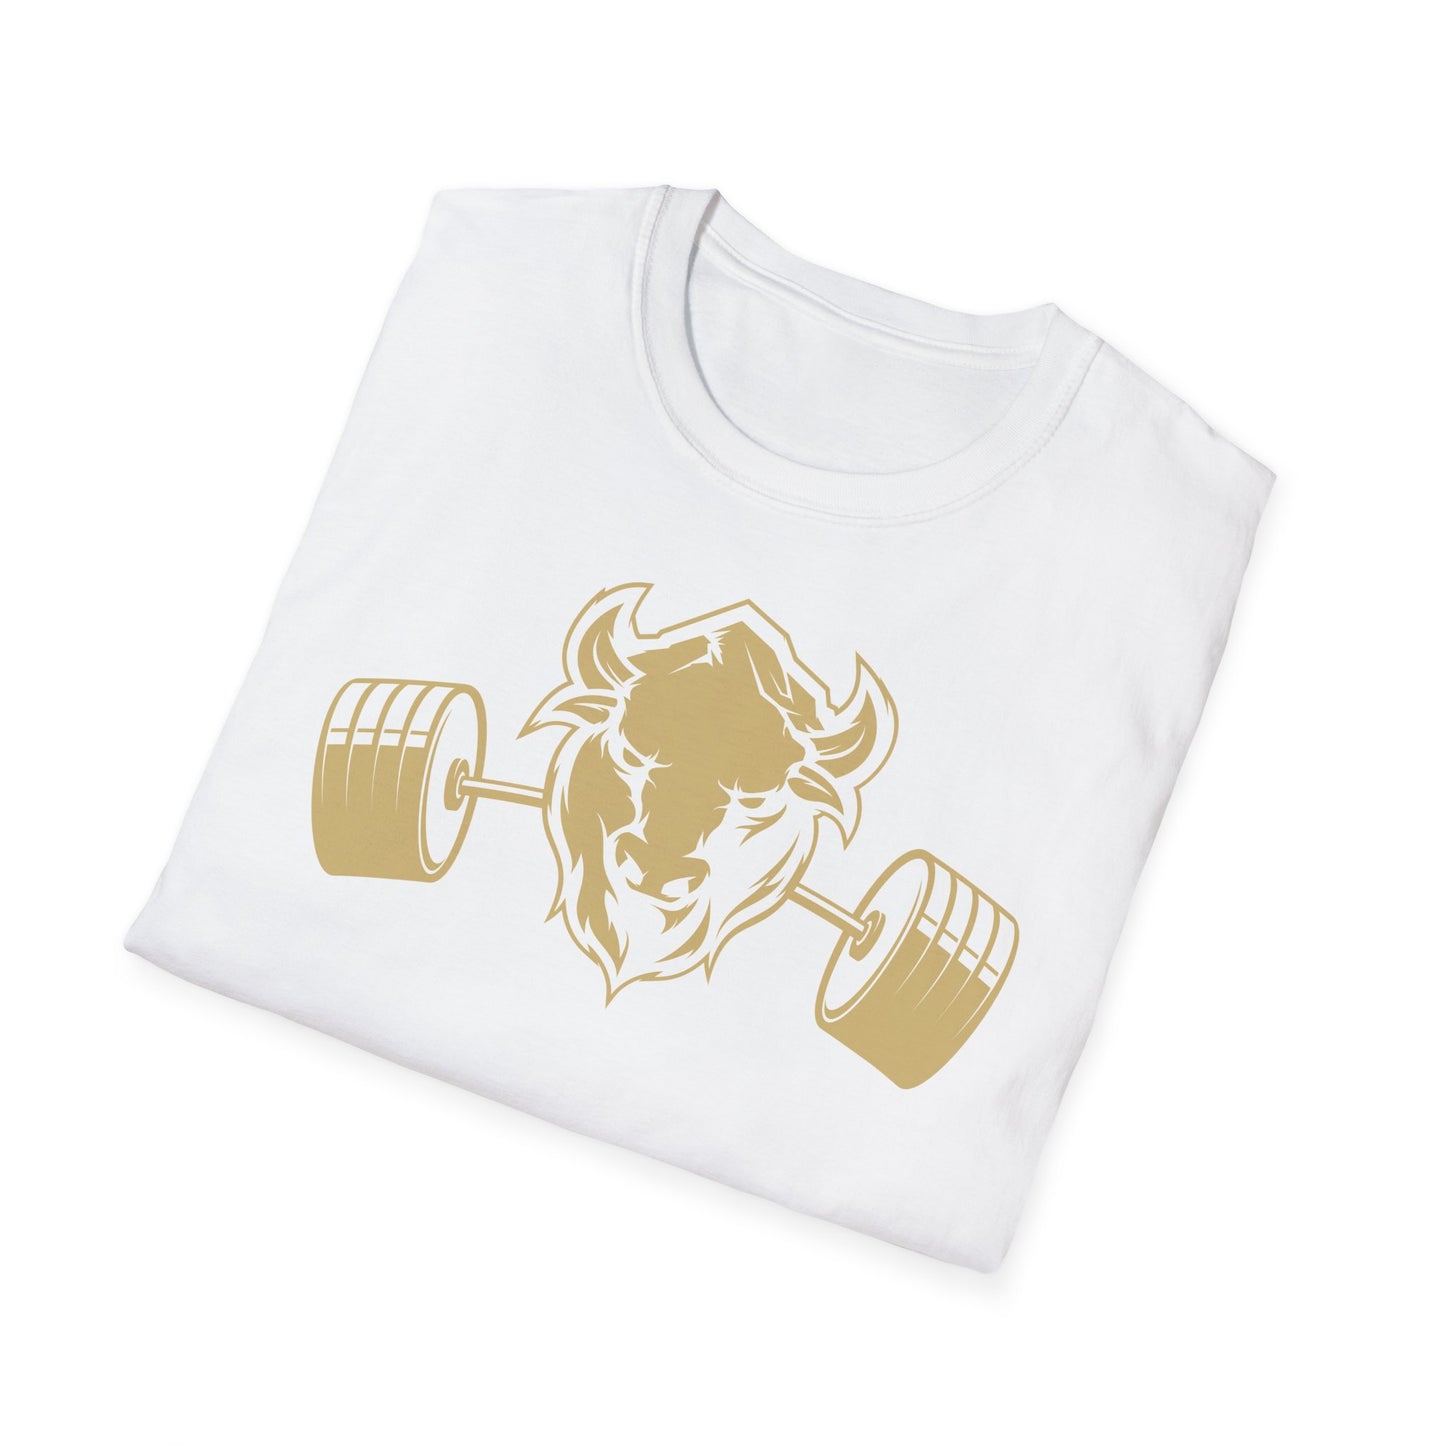 CU Barbell Core Values T-Shirt: Strength